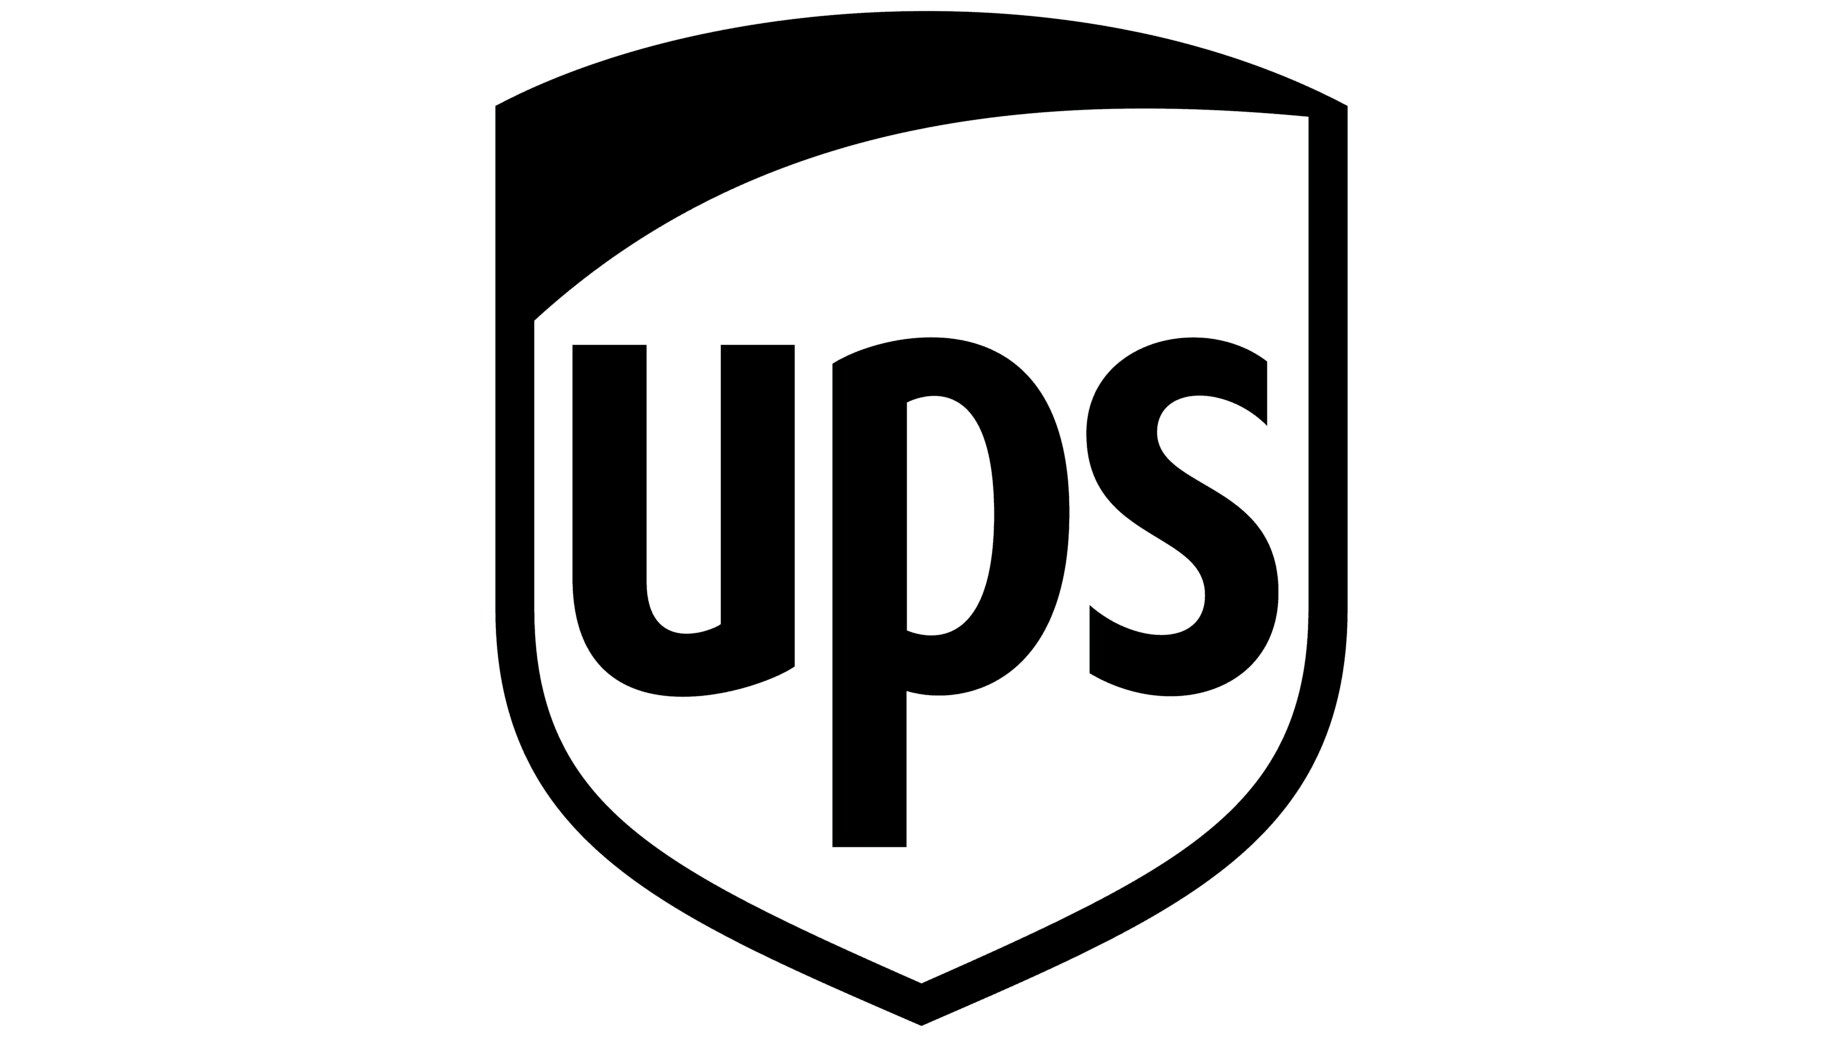 Ups symbol